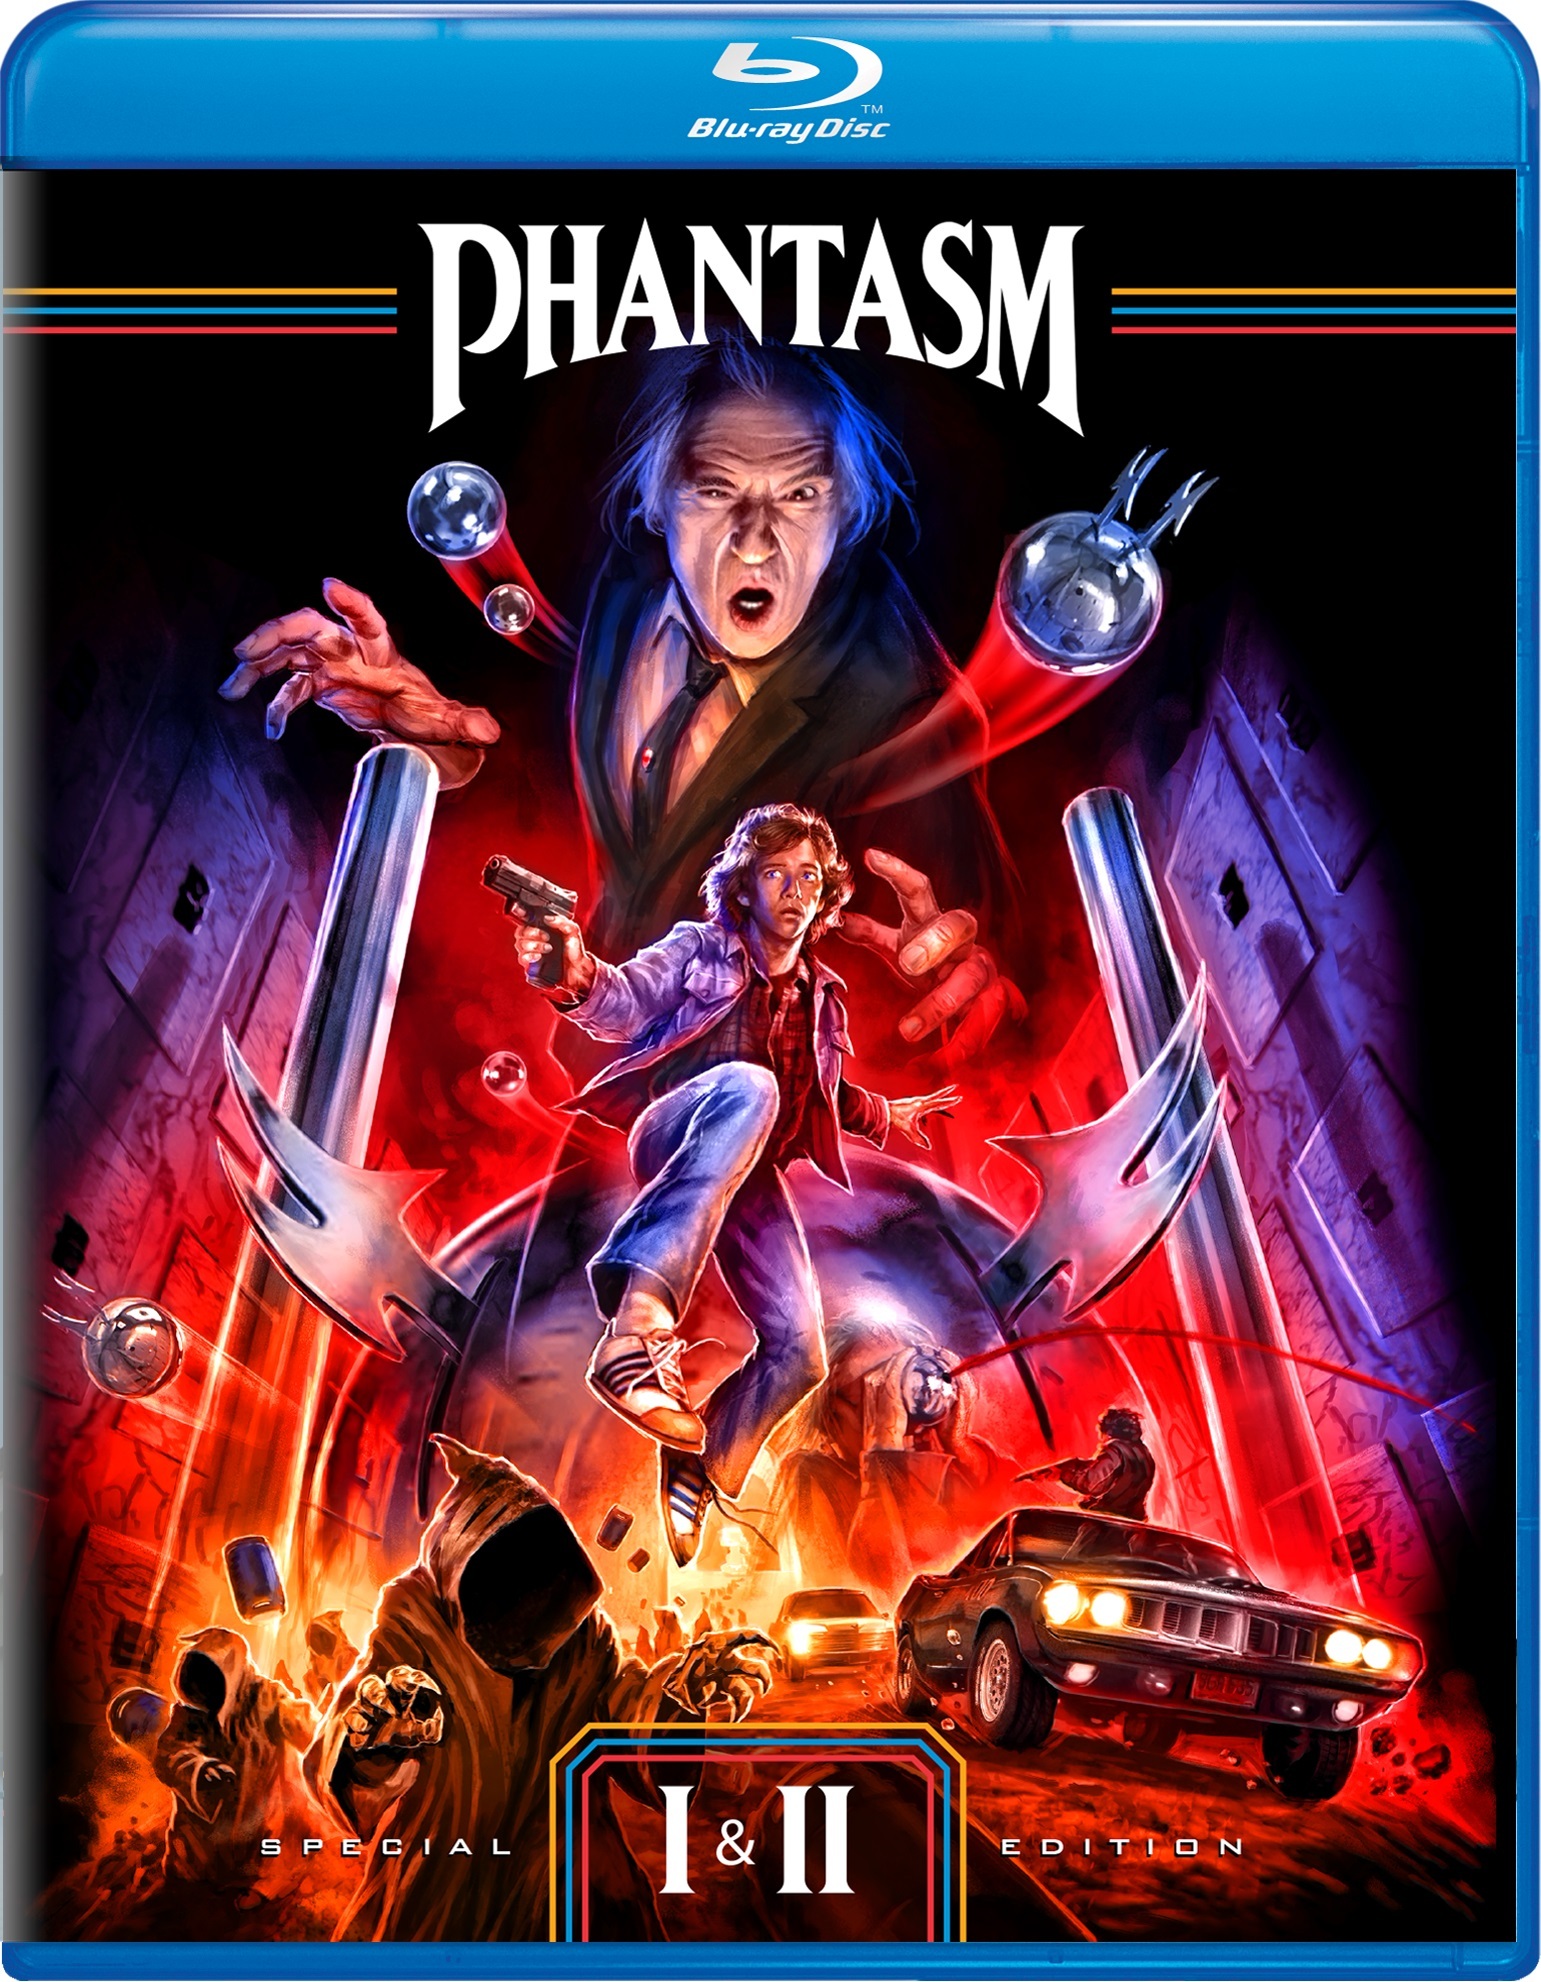 Phantasm/Phantasm II (Special Edition) - Blu-ray [ 1988 ]  - Horror Movies On Blu-ray - Movies On GRUV